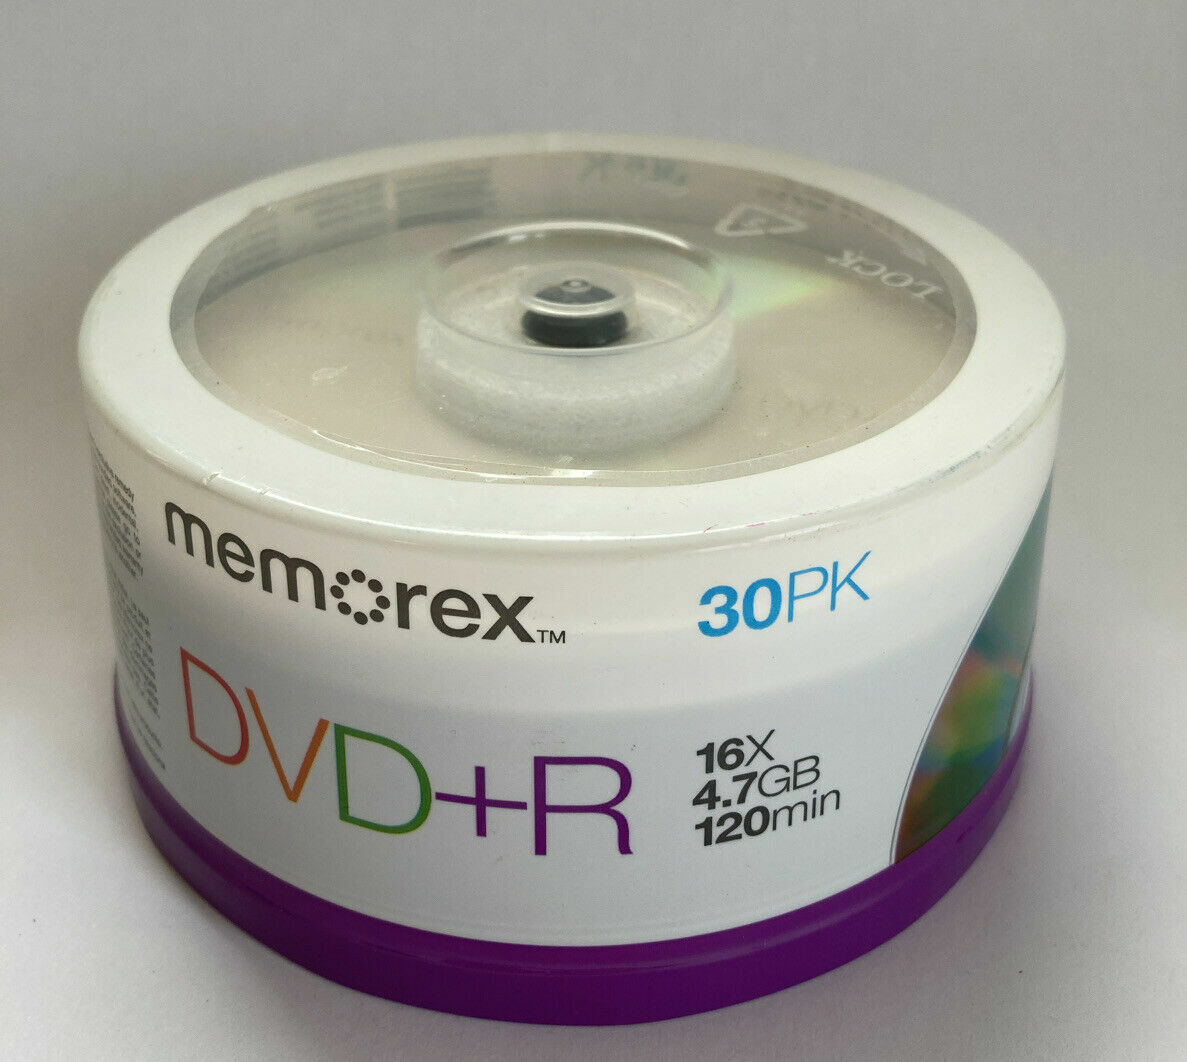 30 Pk Memorex DVD+R 16X 4.7 GB Data 120 Min Video Blank Media 